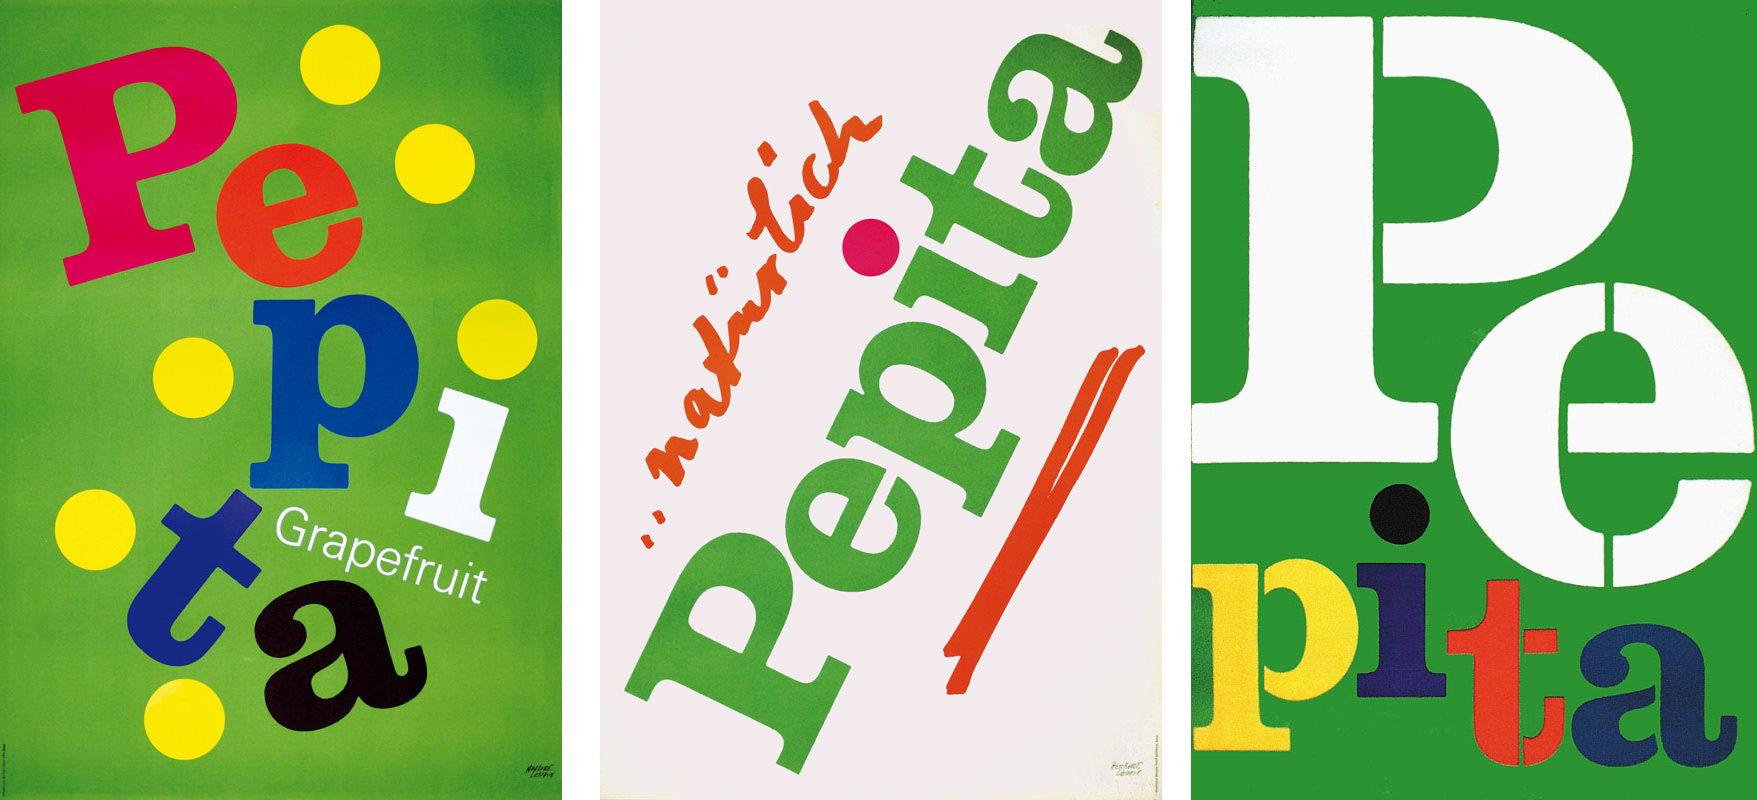 pepita-typographic-poster-leupin